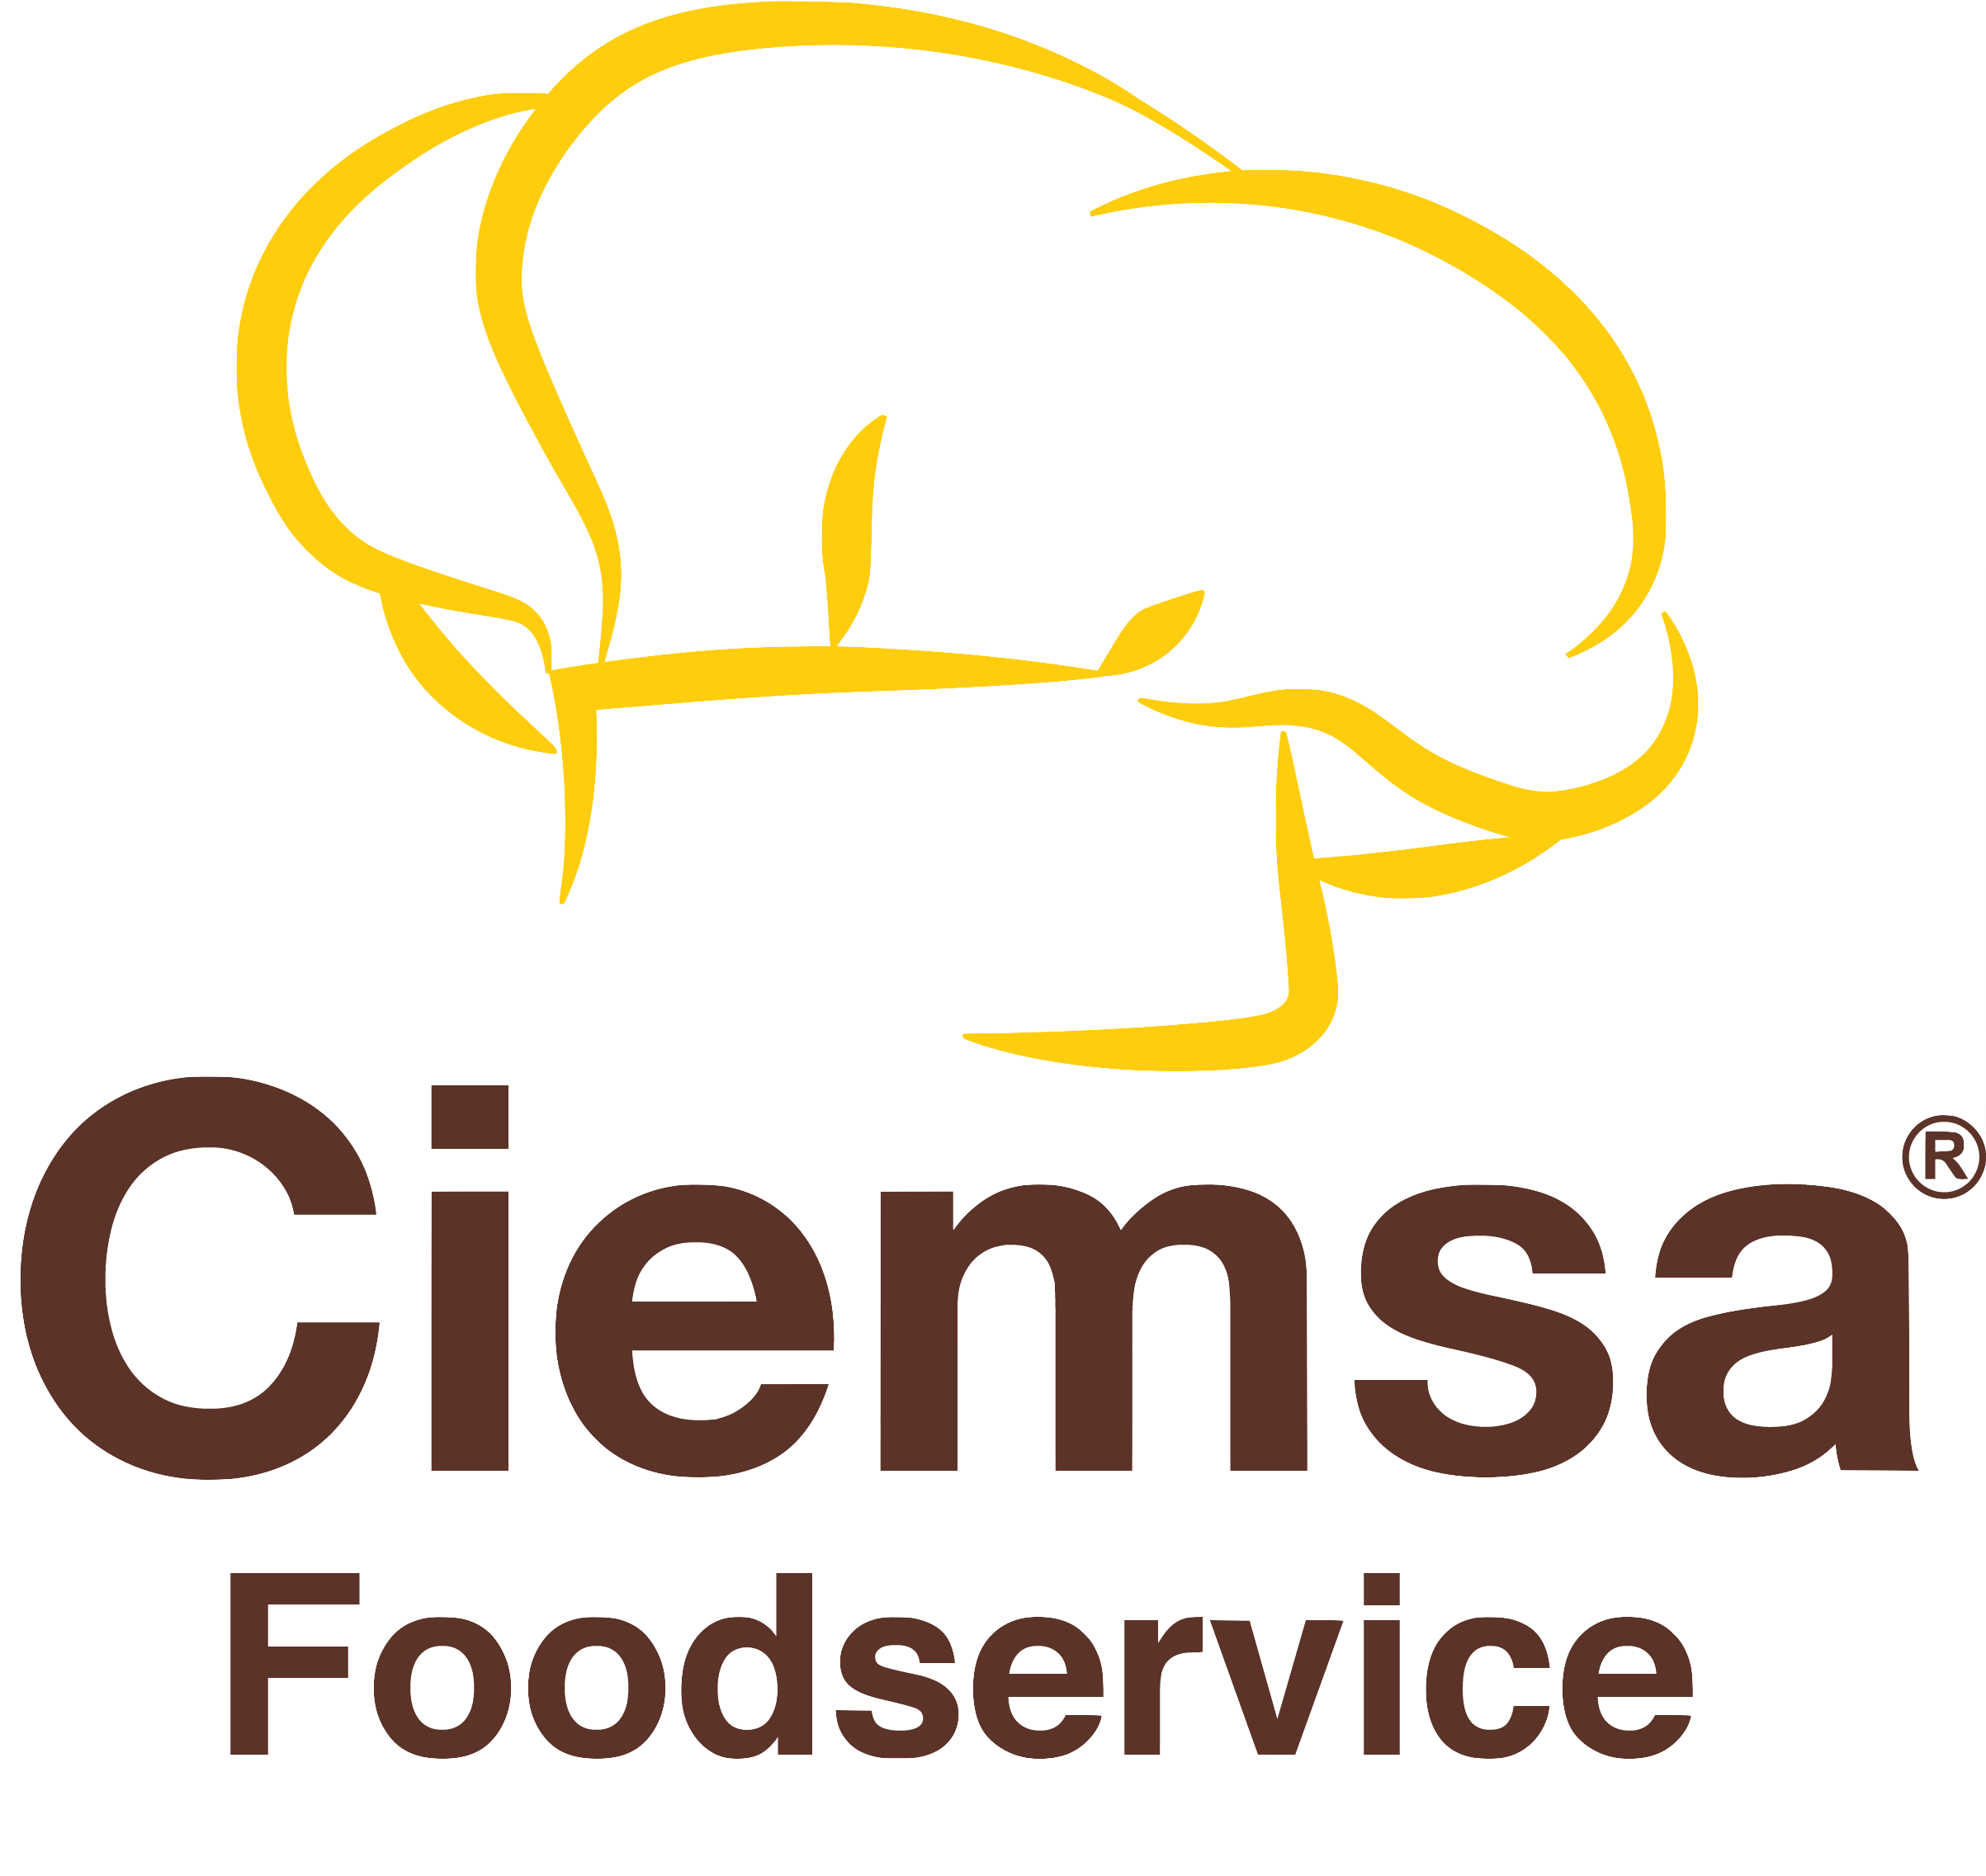 CIEMSA Food Service